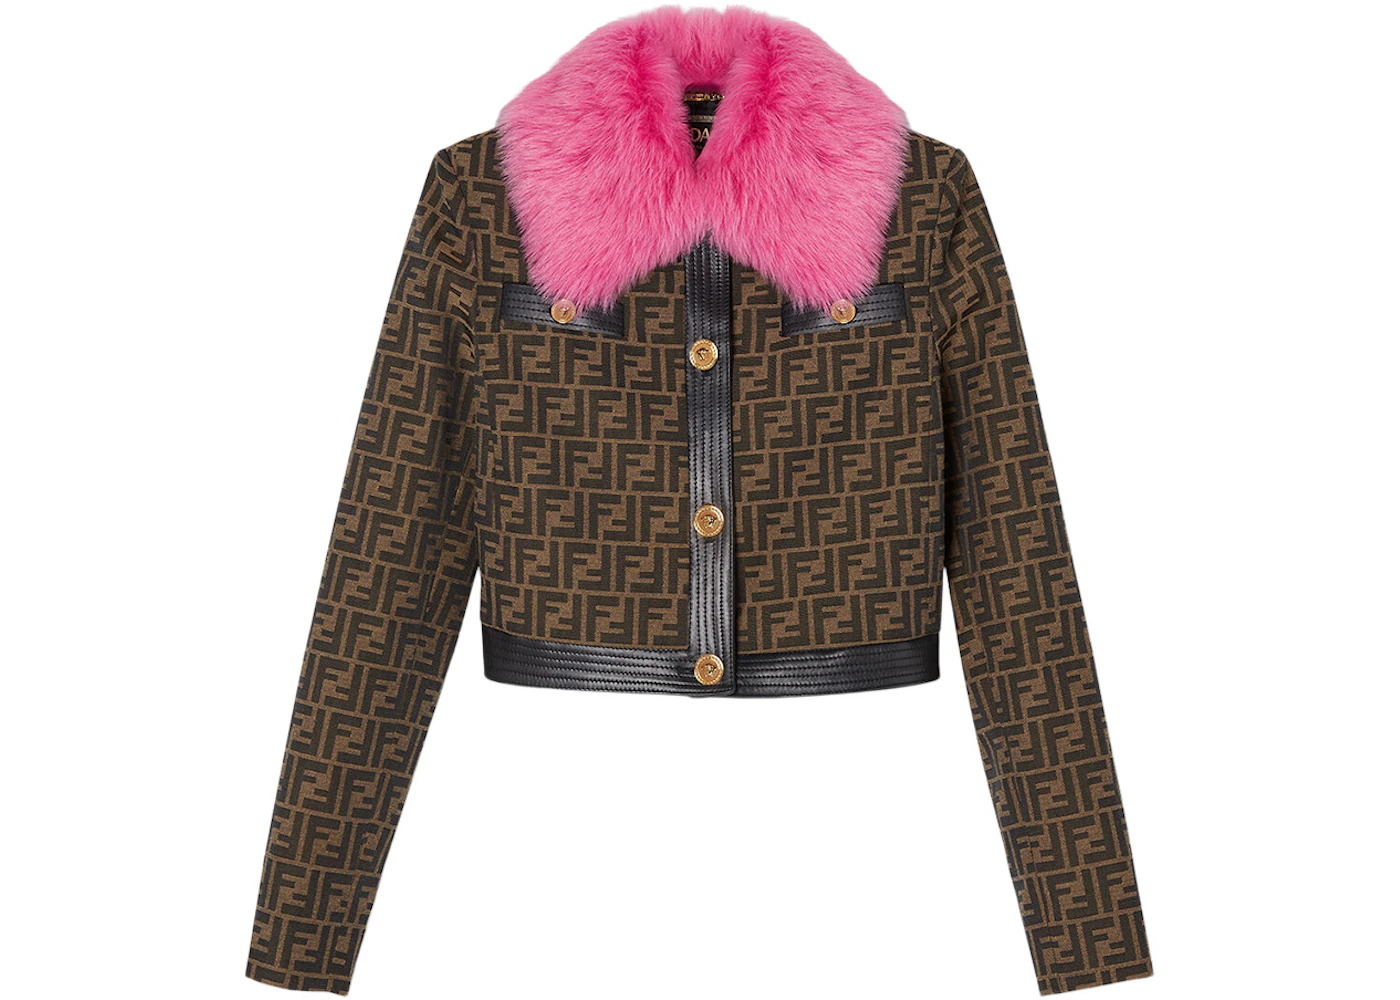 Fendi Fendace FF Faux Fur Jacket Brown/Pink - SS22 - US